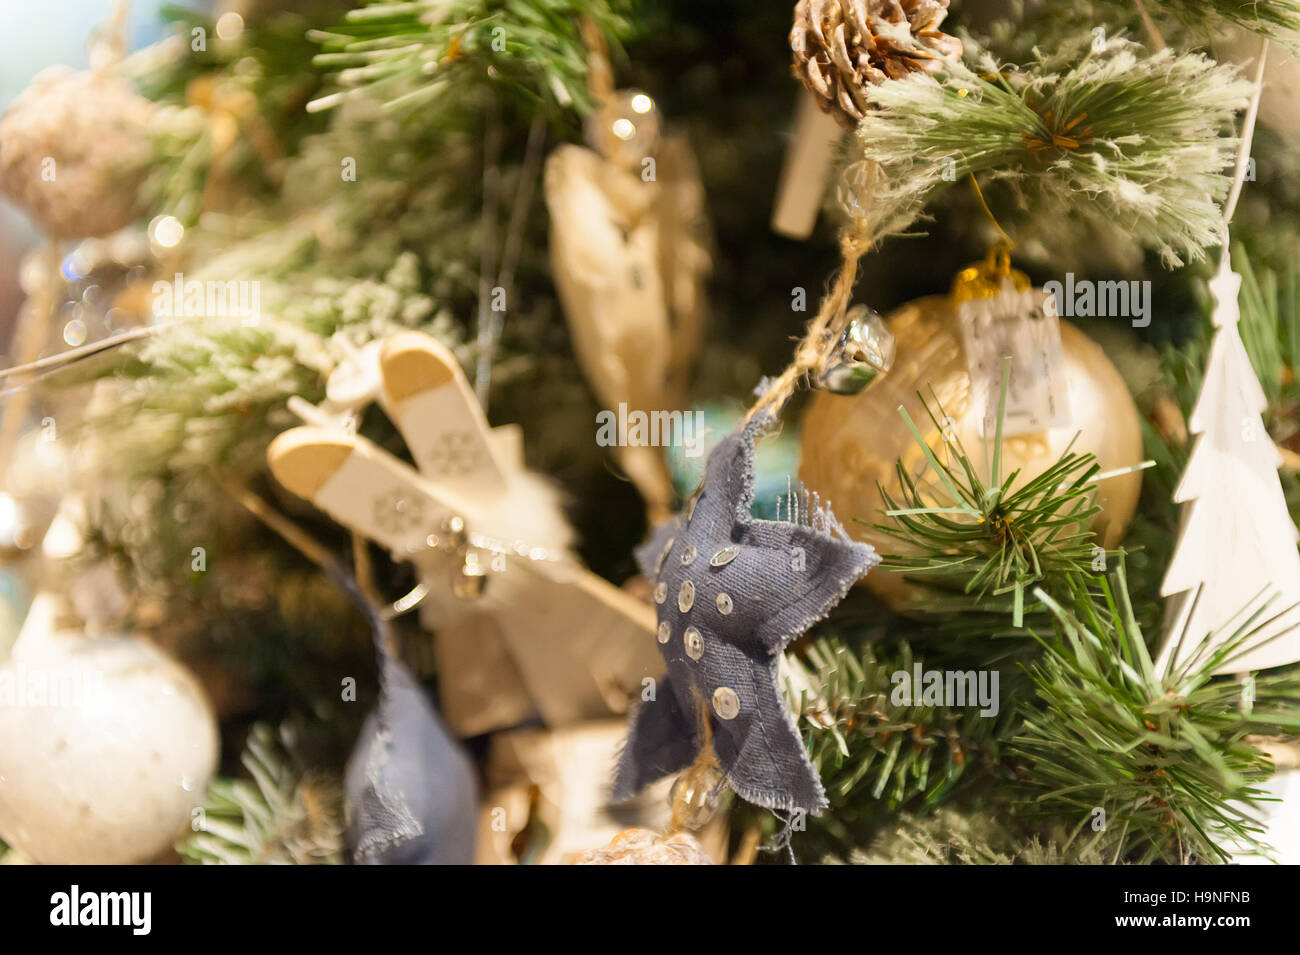 Homemade Christmas toys wooden skis stars and balls hanging on the Christmas tree. Stock Photo